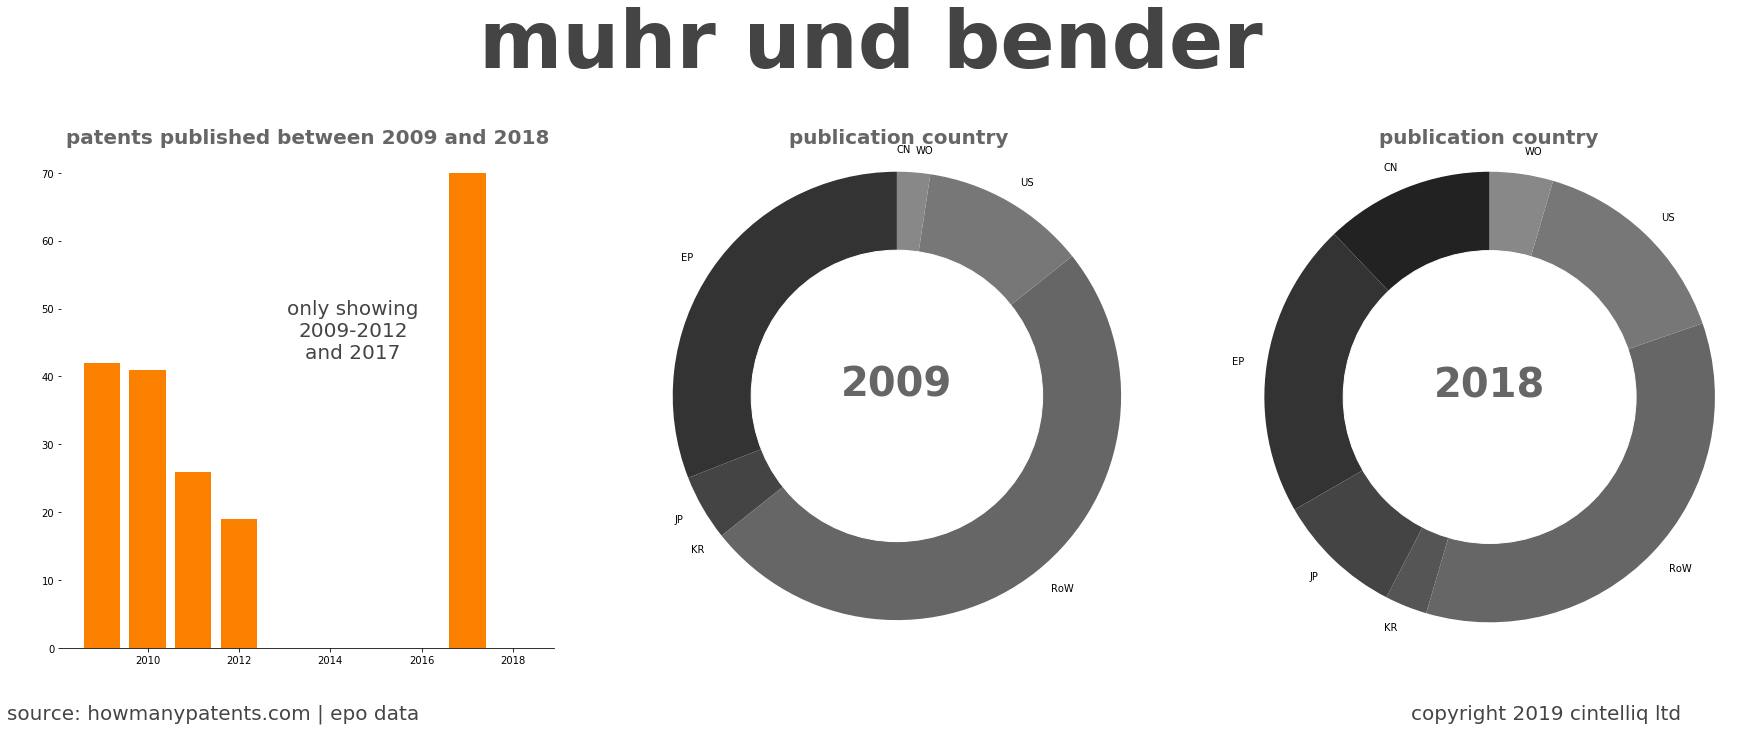 summary of patents for Muhr Und Bender